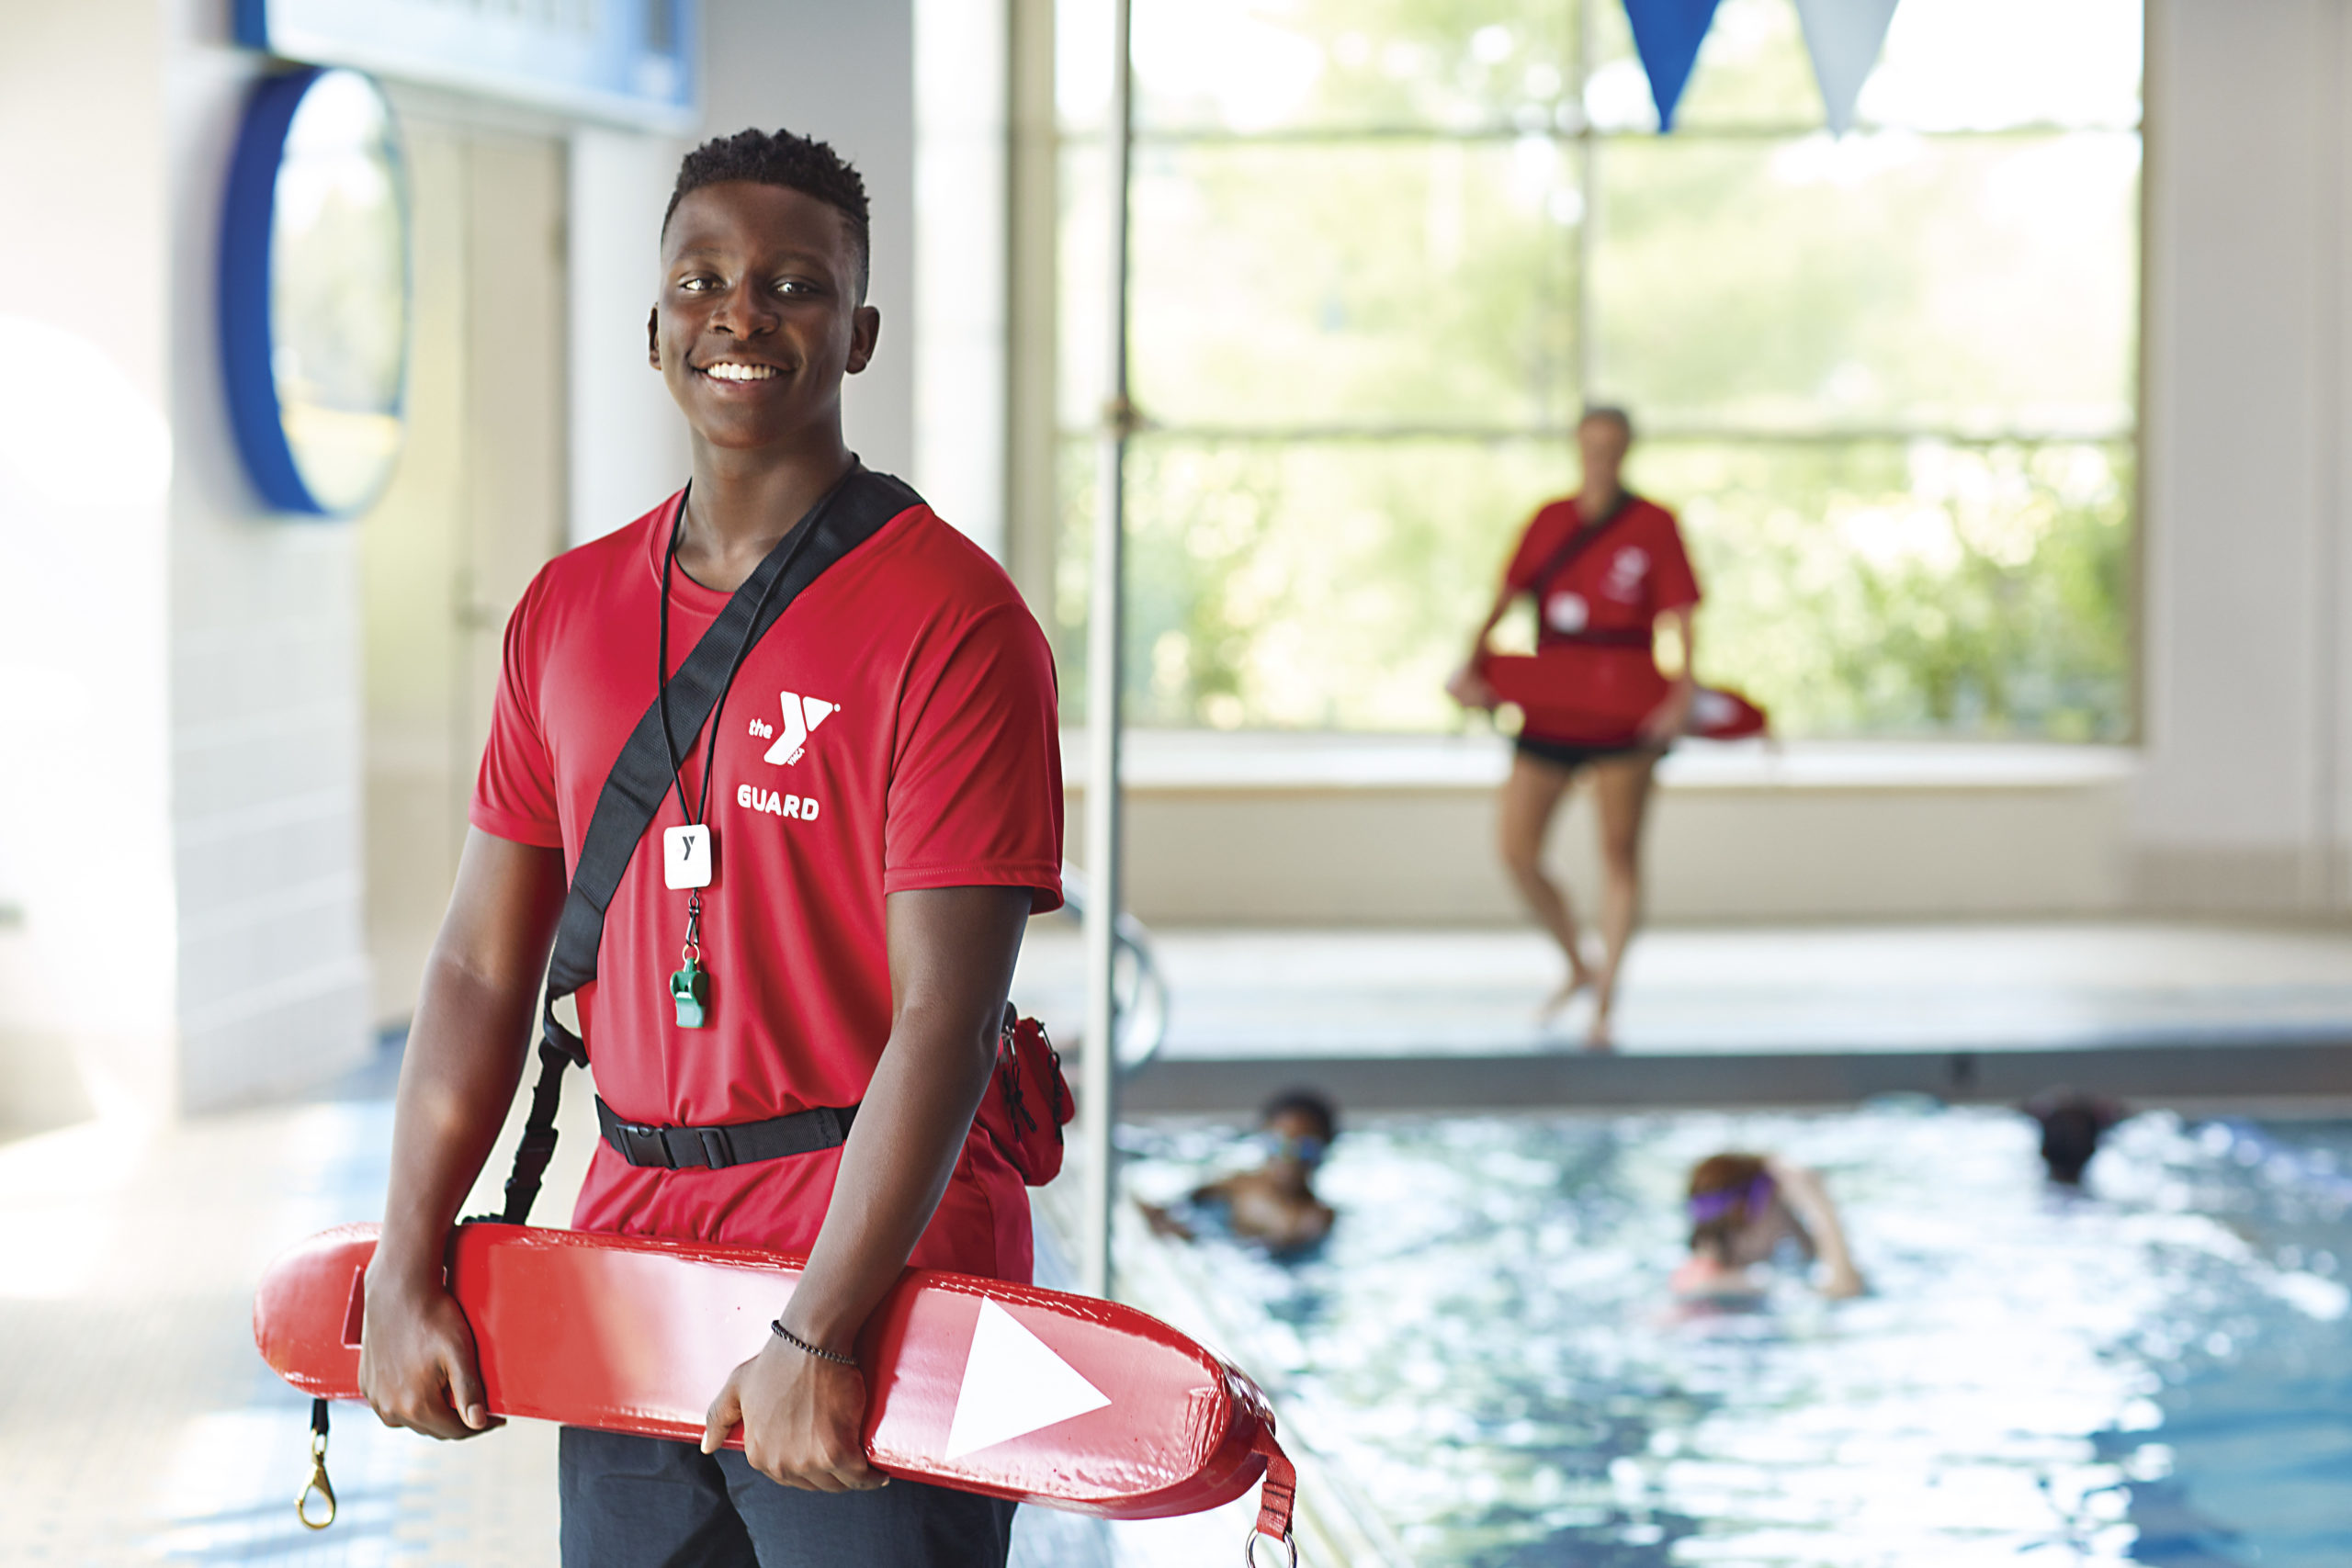 We're offering free lifeguard/swim instructor training